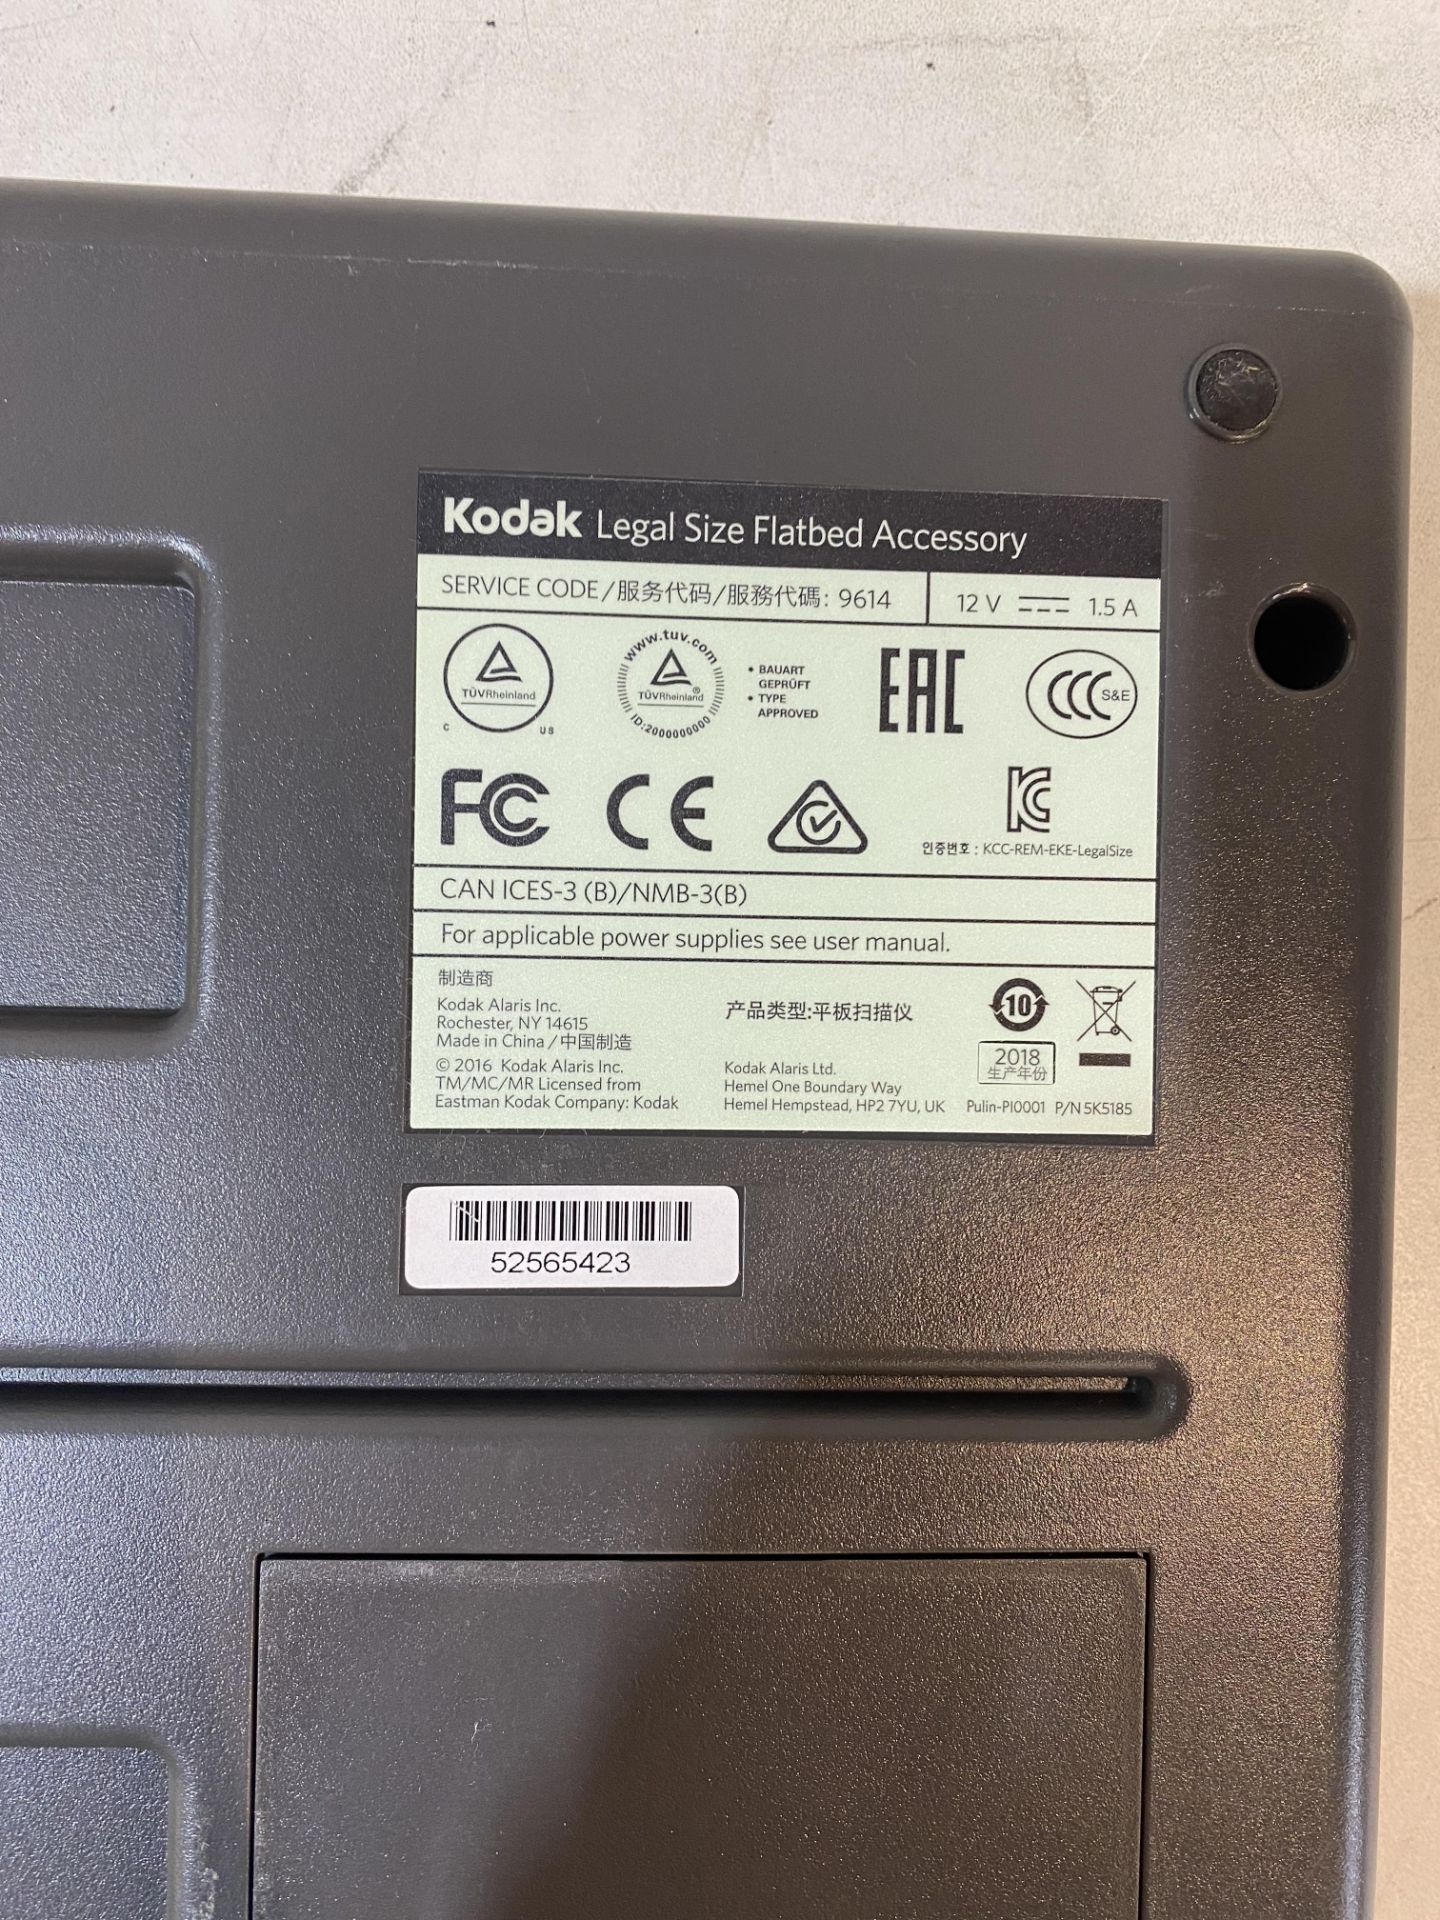 Kodak Alaris Legal Size Flatbed Scanner Accessory - Image 5 of 5